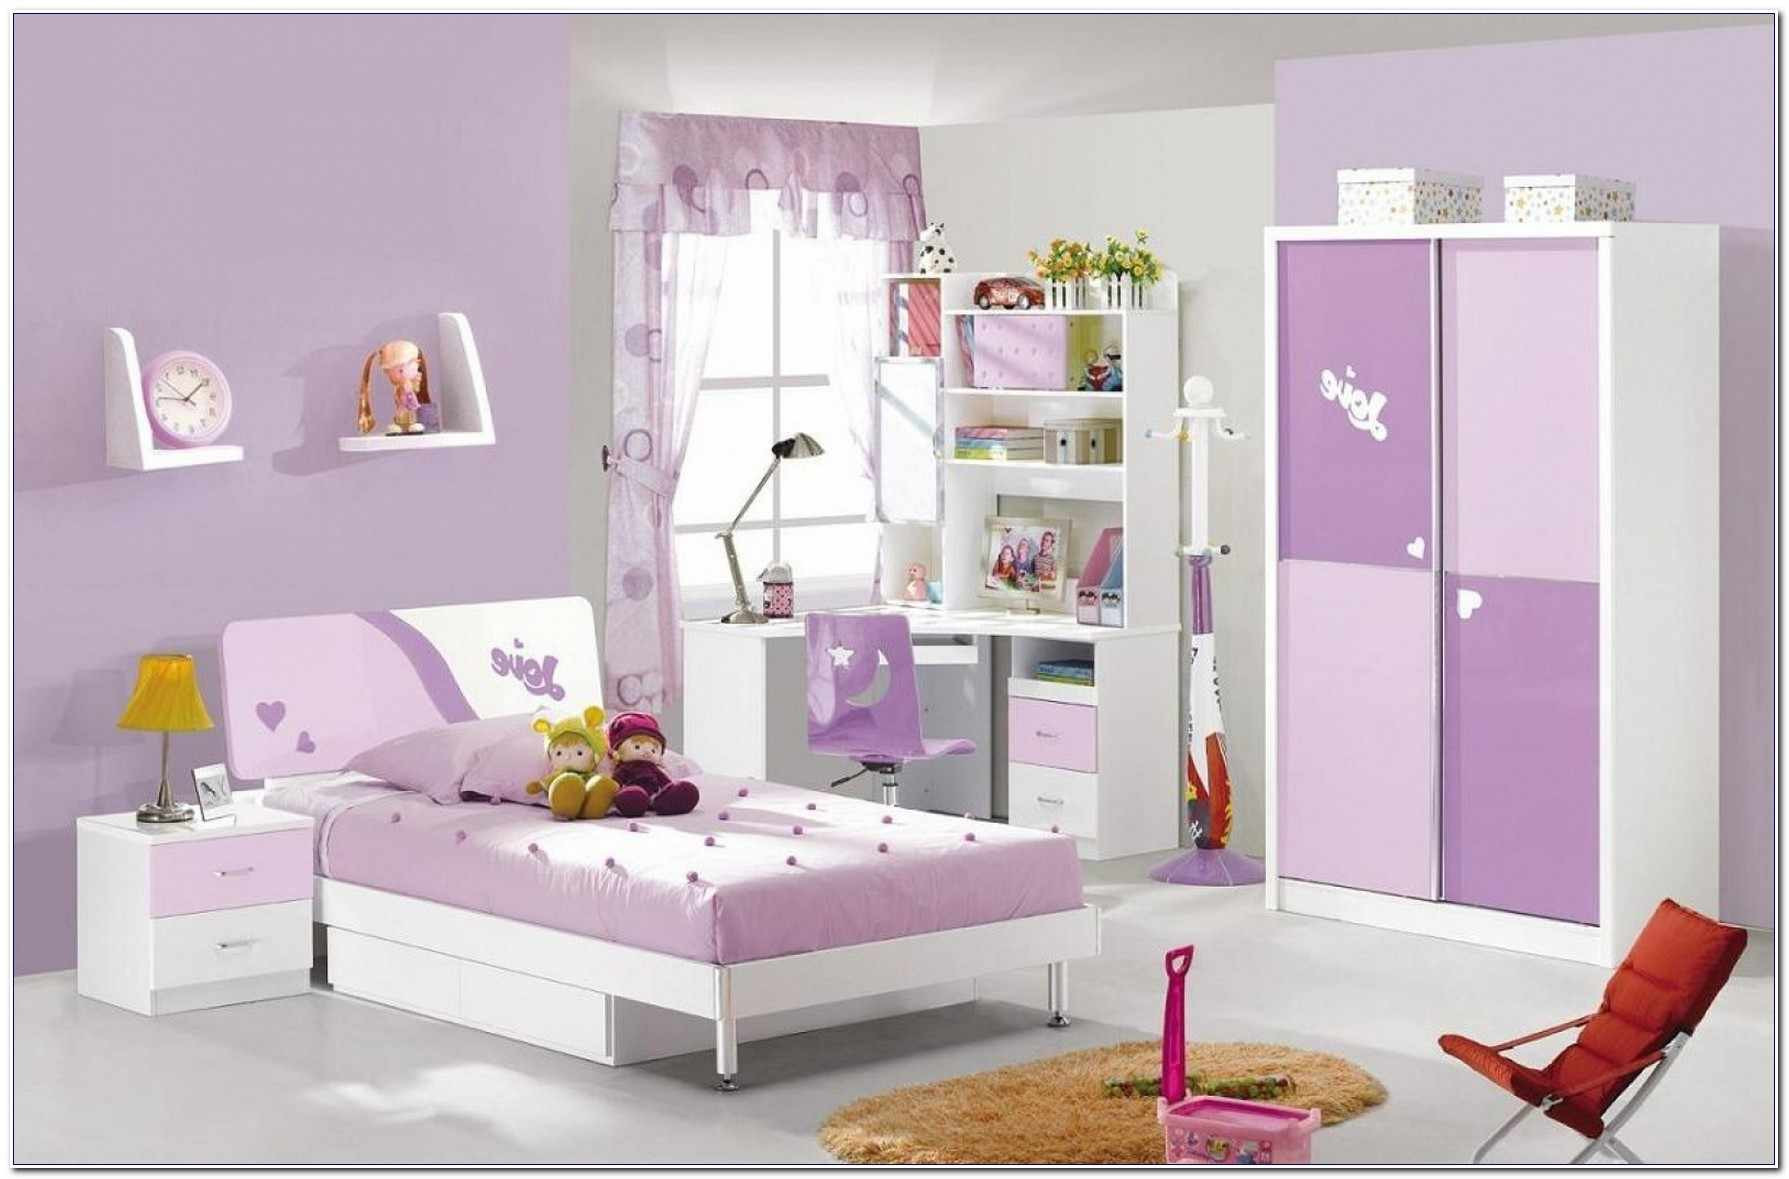 Best ideas about Kids Bedroom Sets Under 500
. Save or Pin Child’S Bedroom Set – Bedroom Ideas Now.